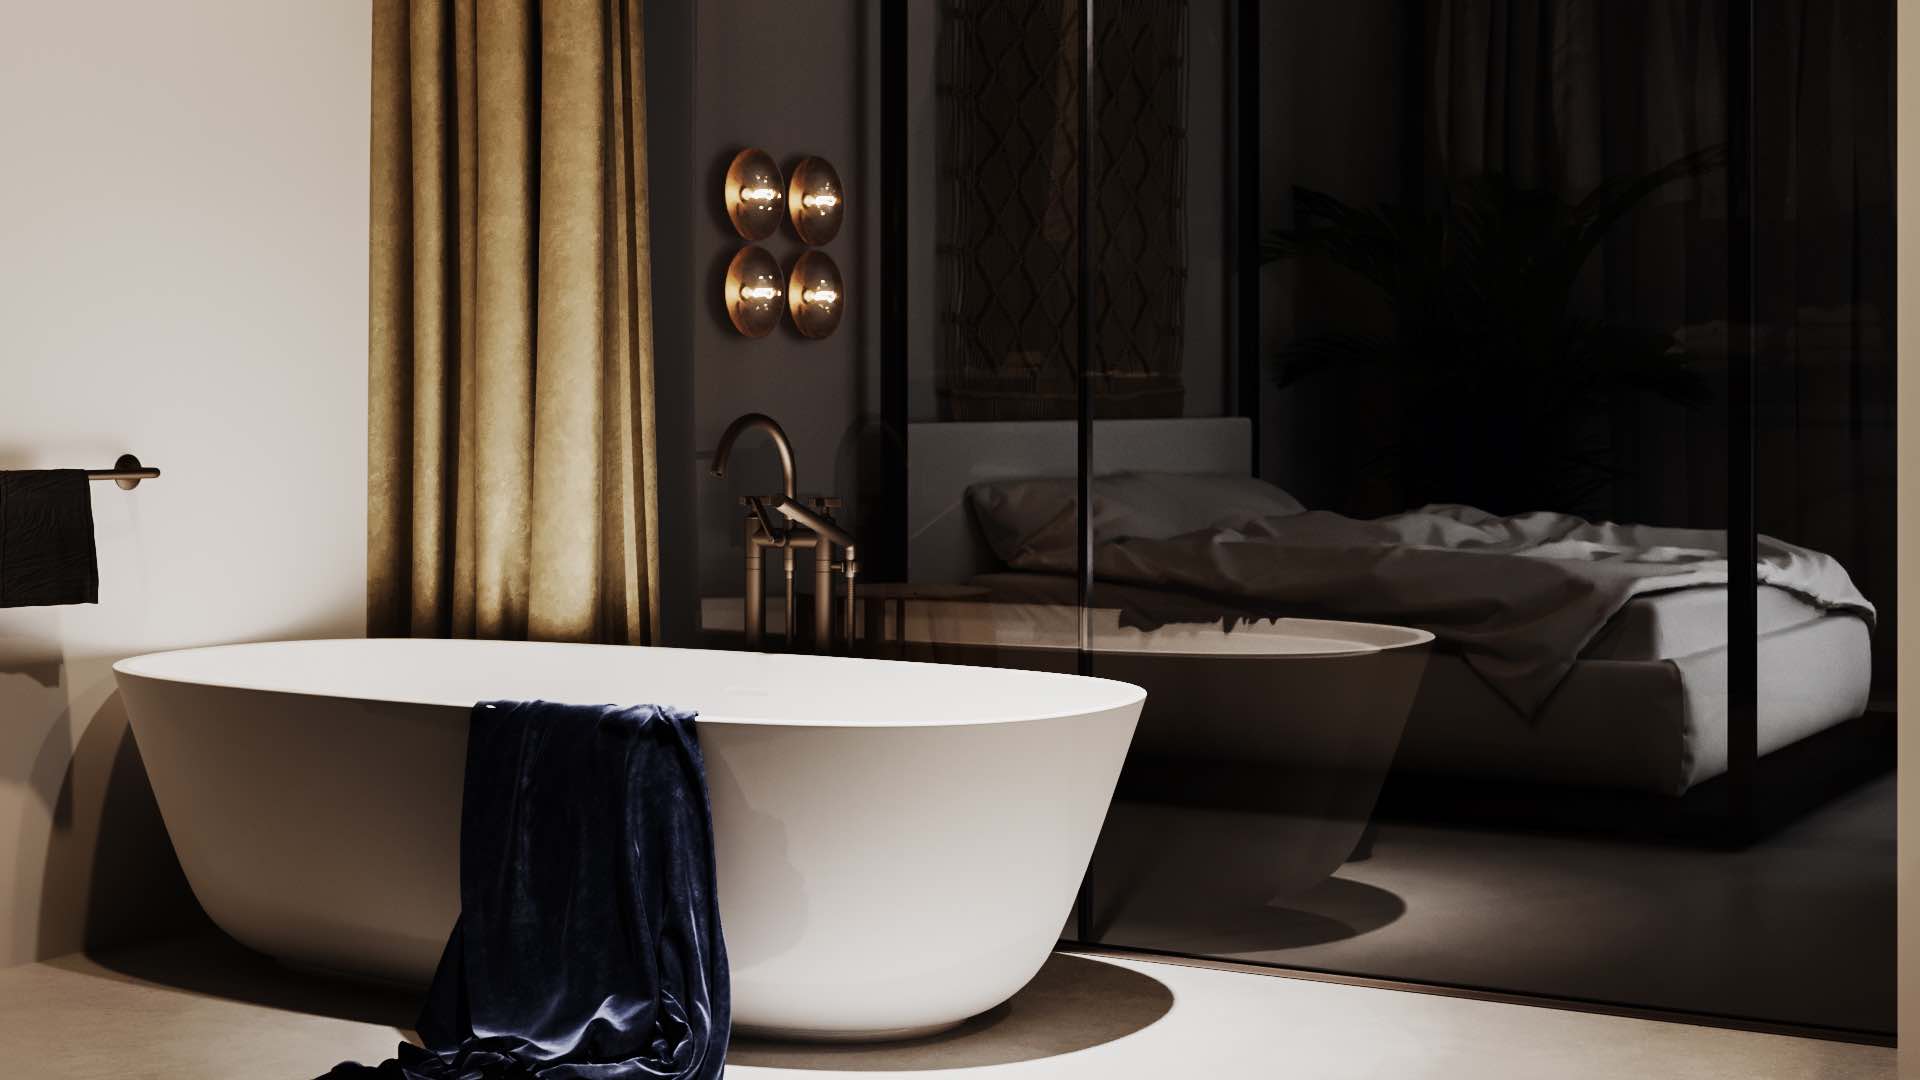 Oasis Apartment bathroom design bathtub - cgi visualization